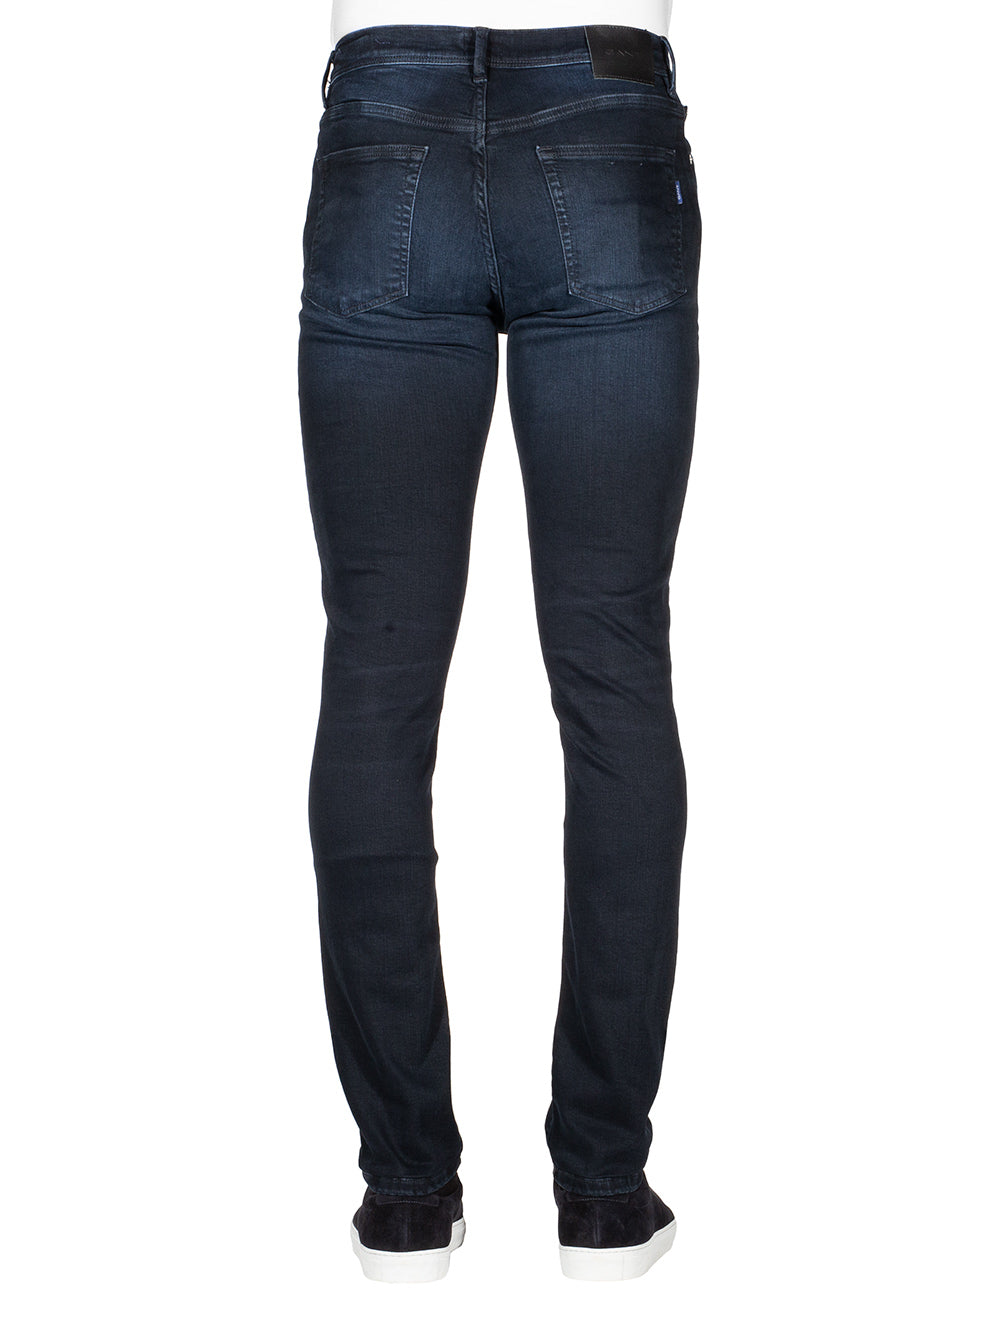 Maxen Extra Slim Fit Active Recover Jeans Black Vintage